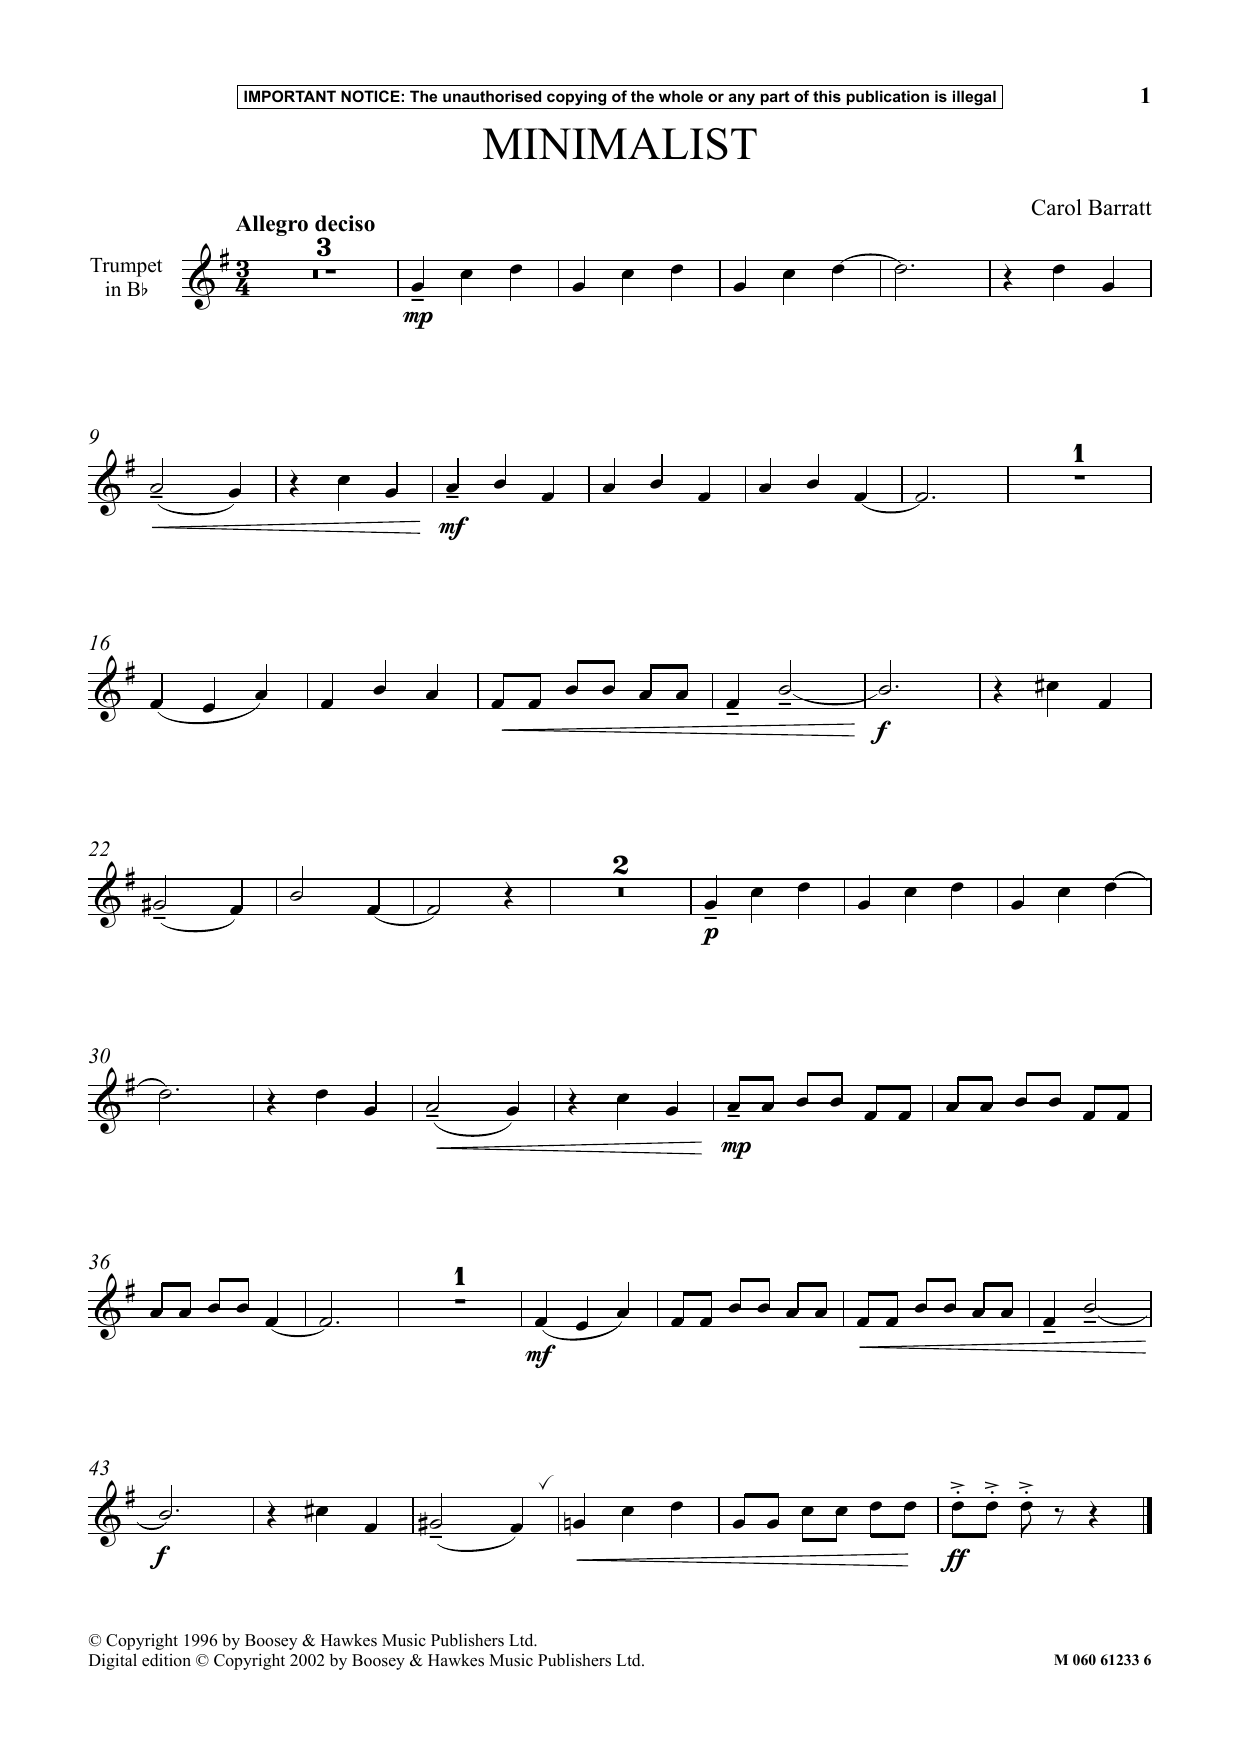 Carol Barratt Minimalist Sheet Music Notes & Chords for Instrumental Solo - Download or Print PDF